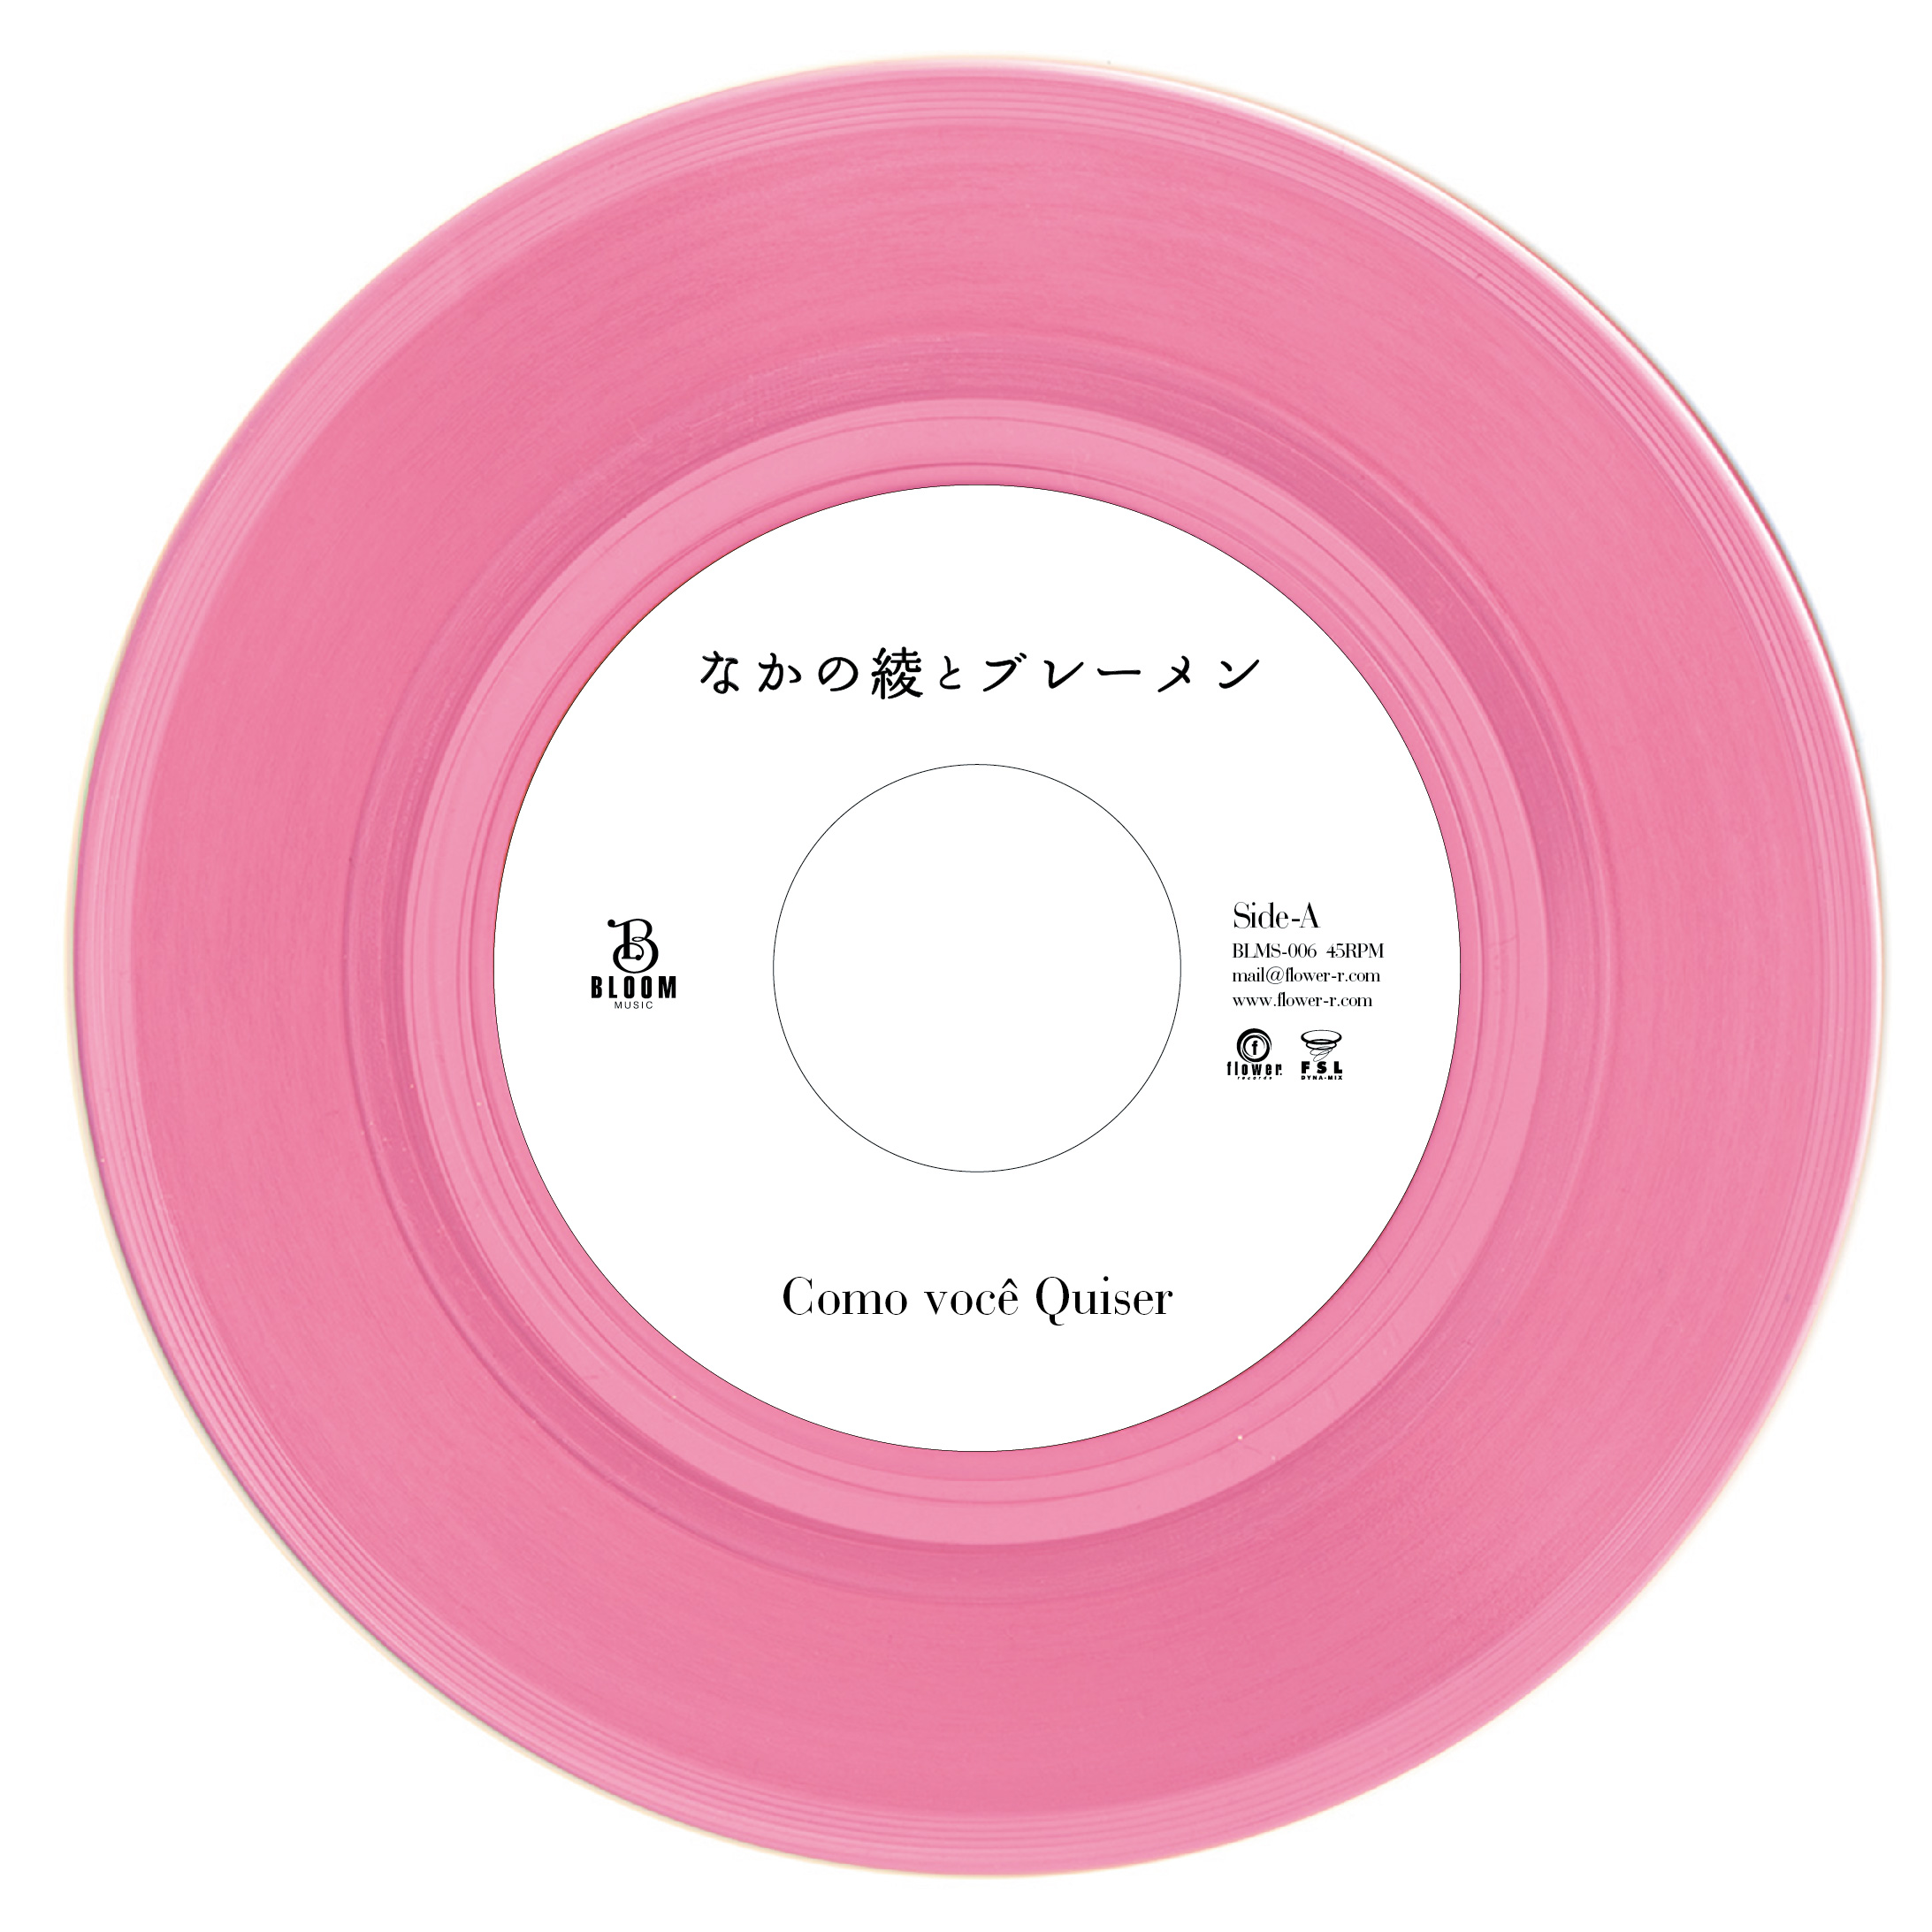 COMO VOCE QUISER c/w Υɥ feat. CENTRAL (7 inch)